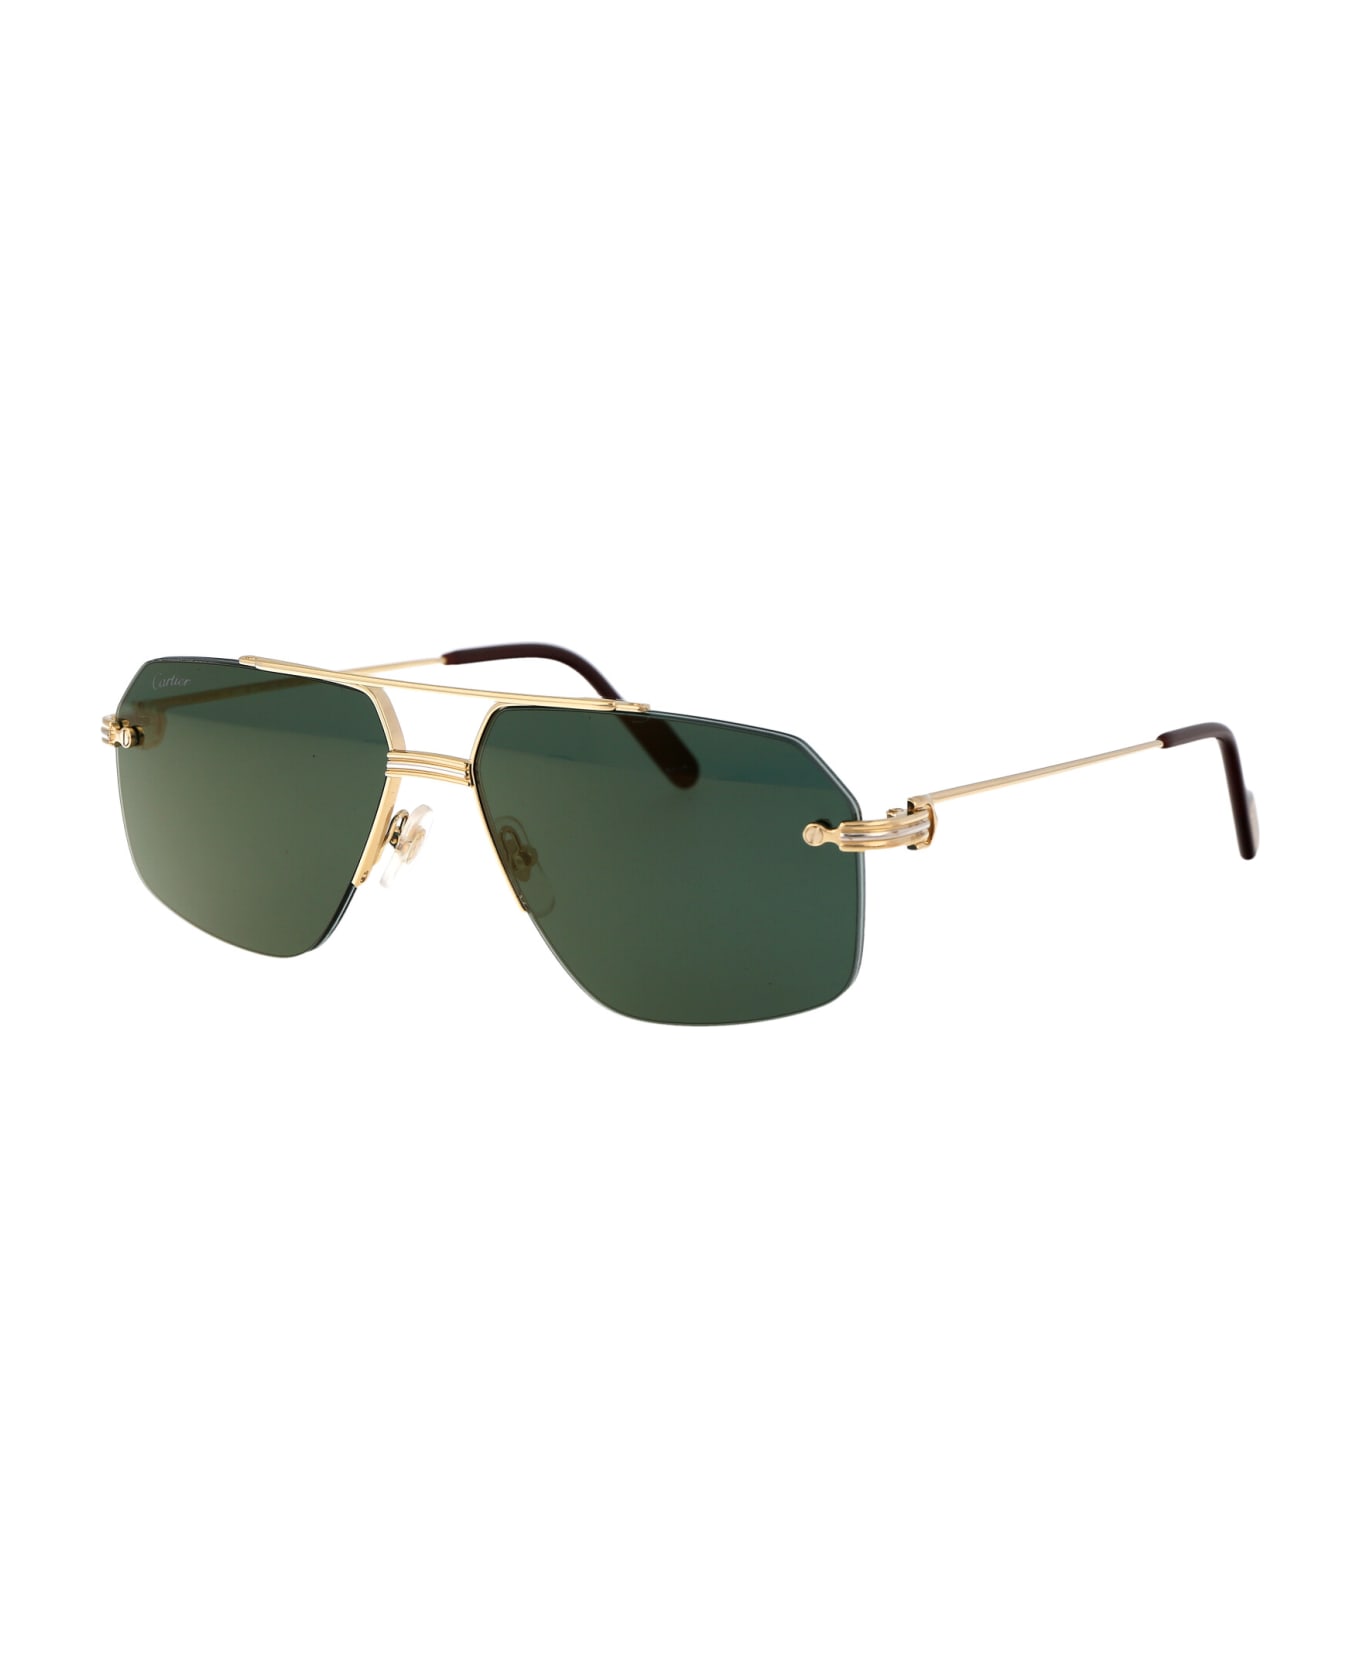 Cartier Eyewear Ct0426s Sunglasses - 002 GOLD GOLD GREEN サングラス